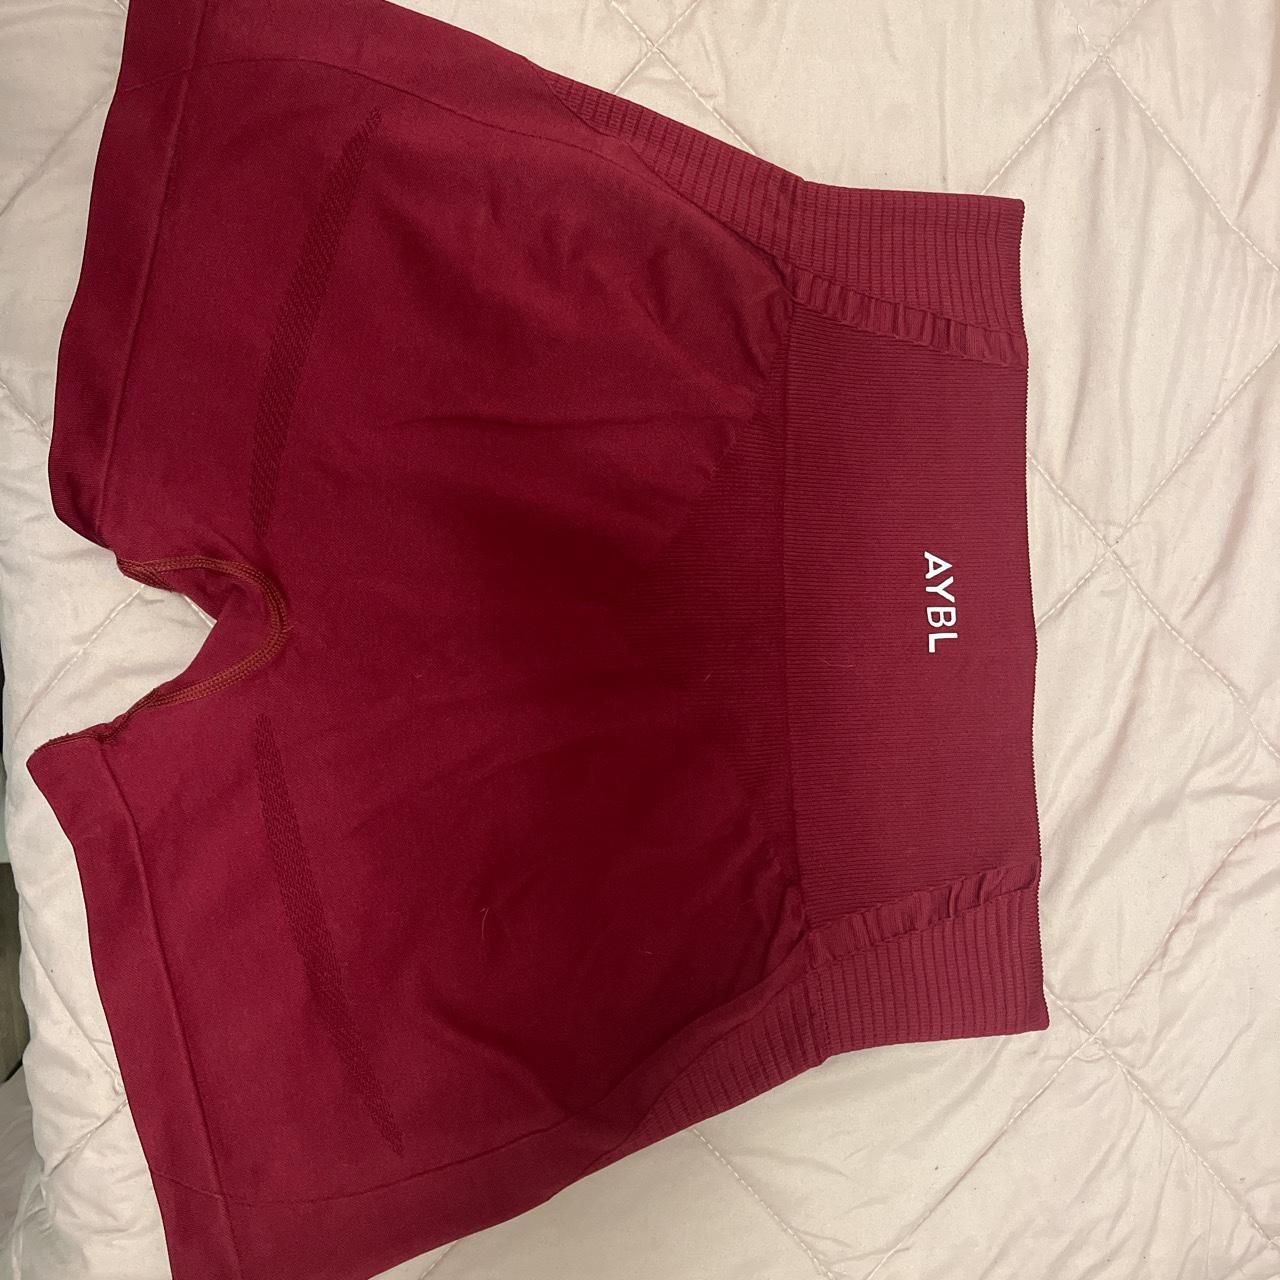 AYBL Seamless Red Gym Shorts - Depop